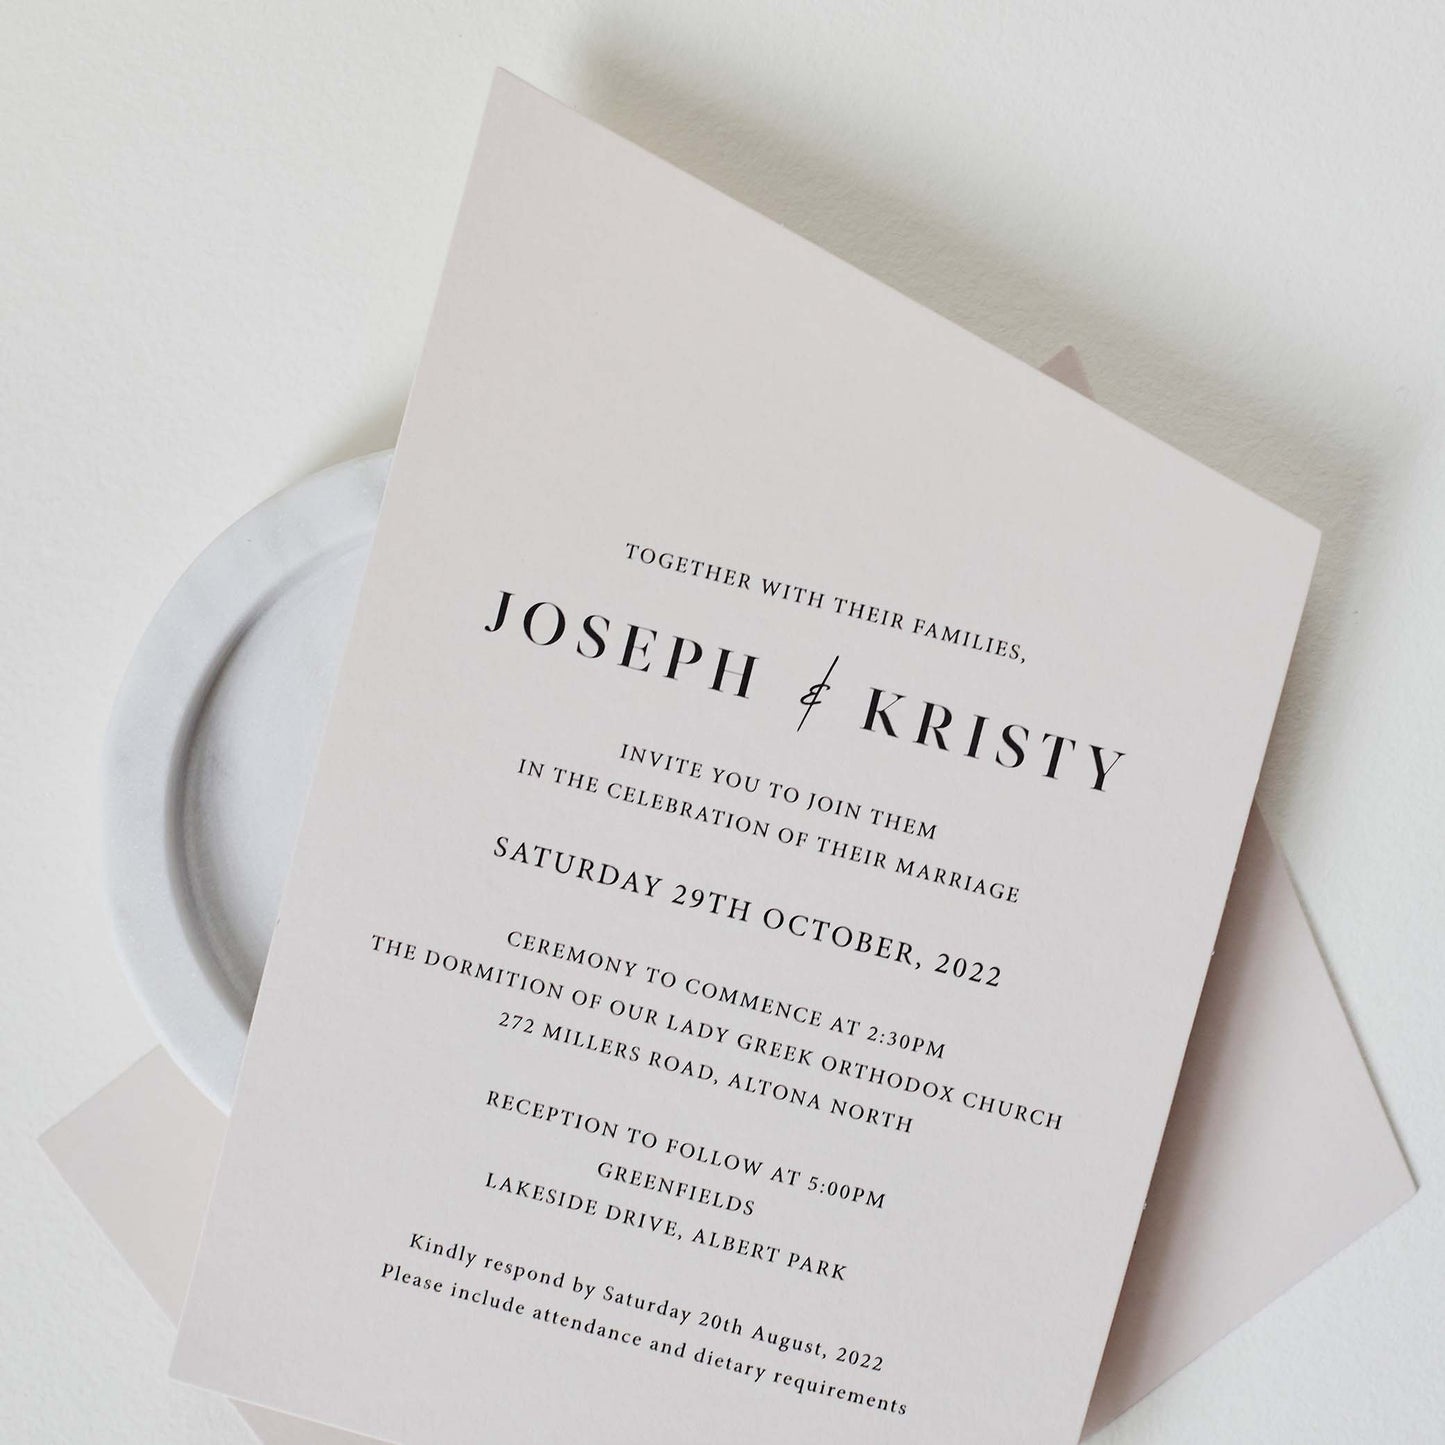 Joseph and Kristy Invitation